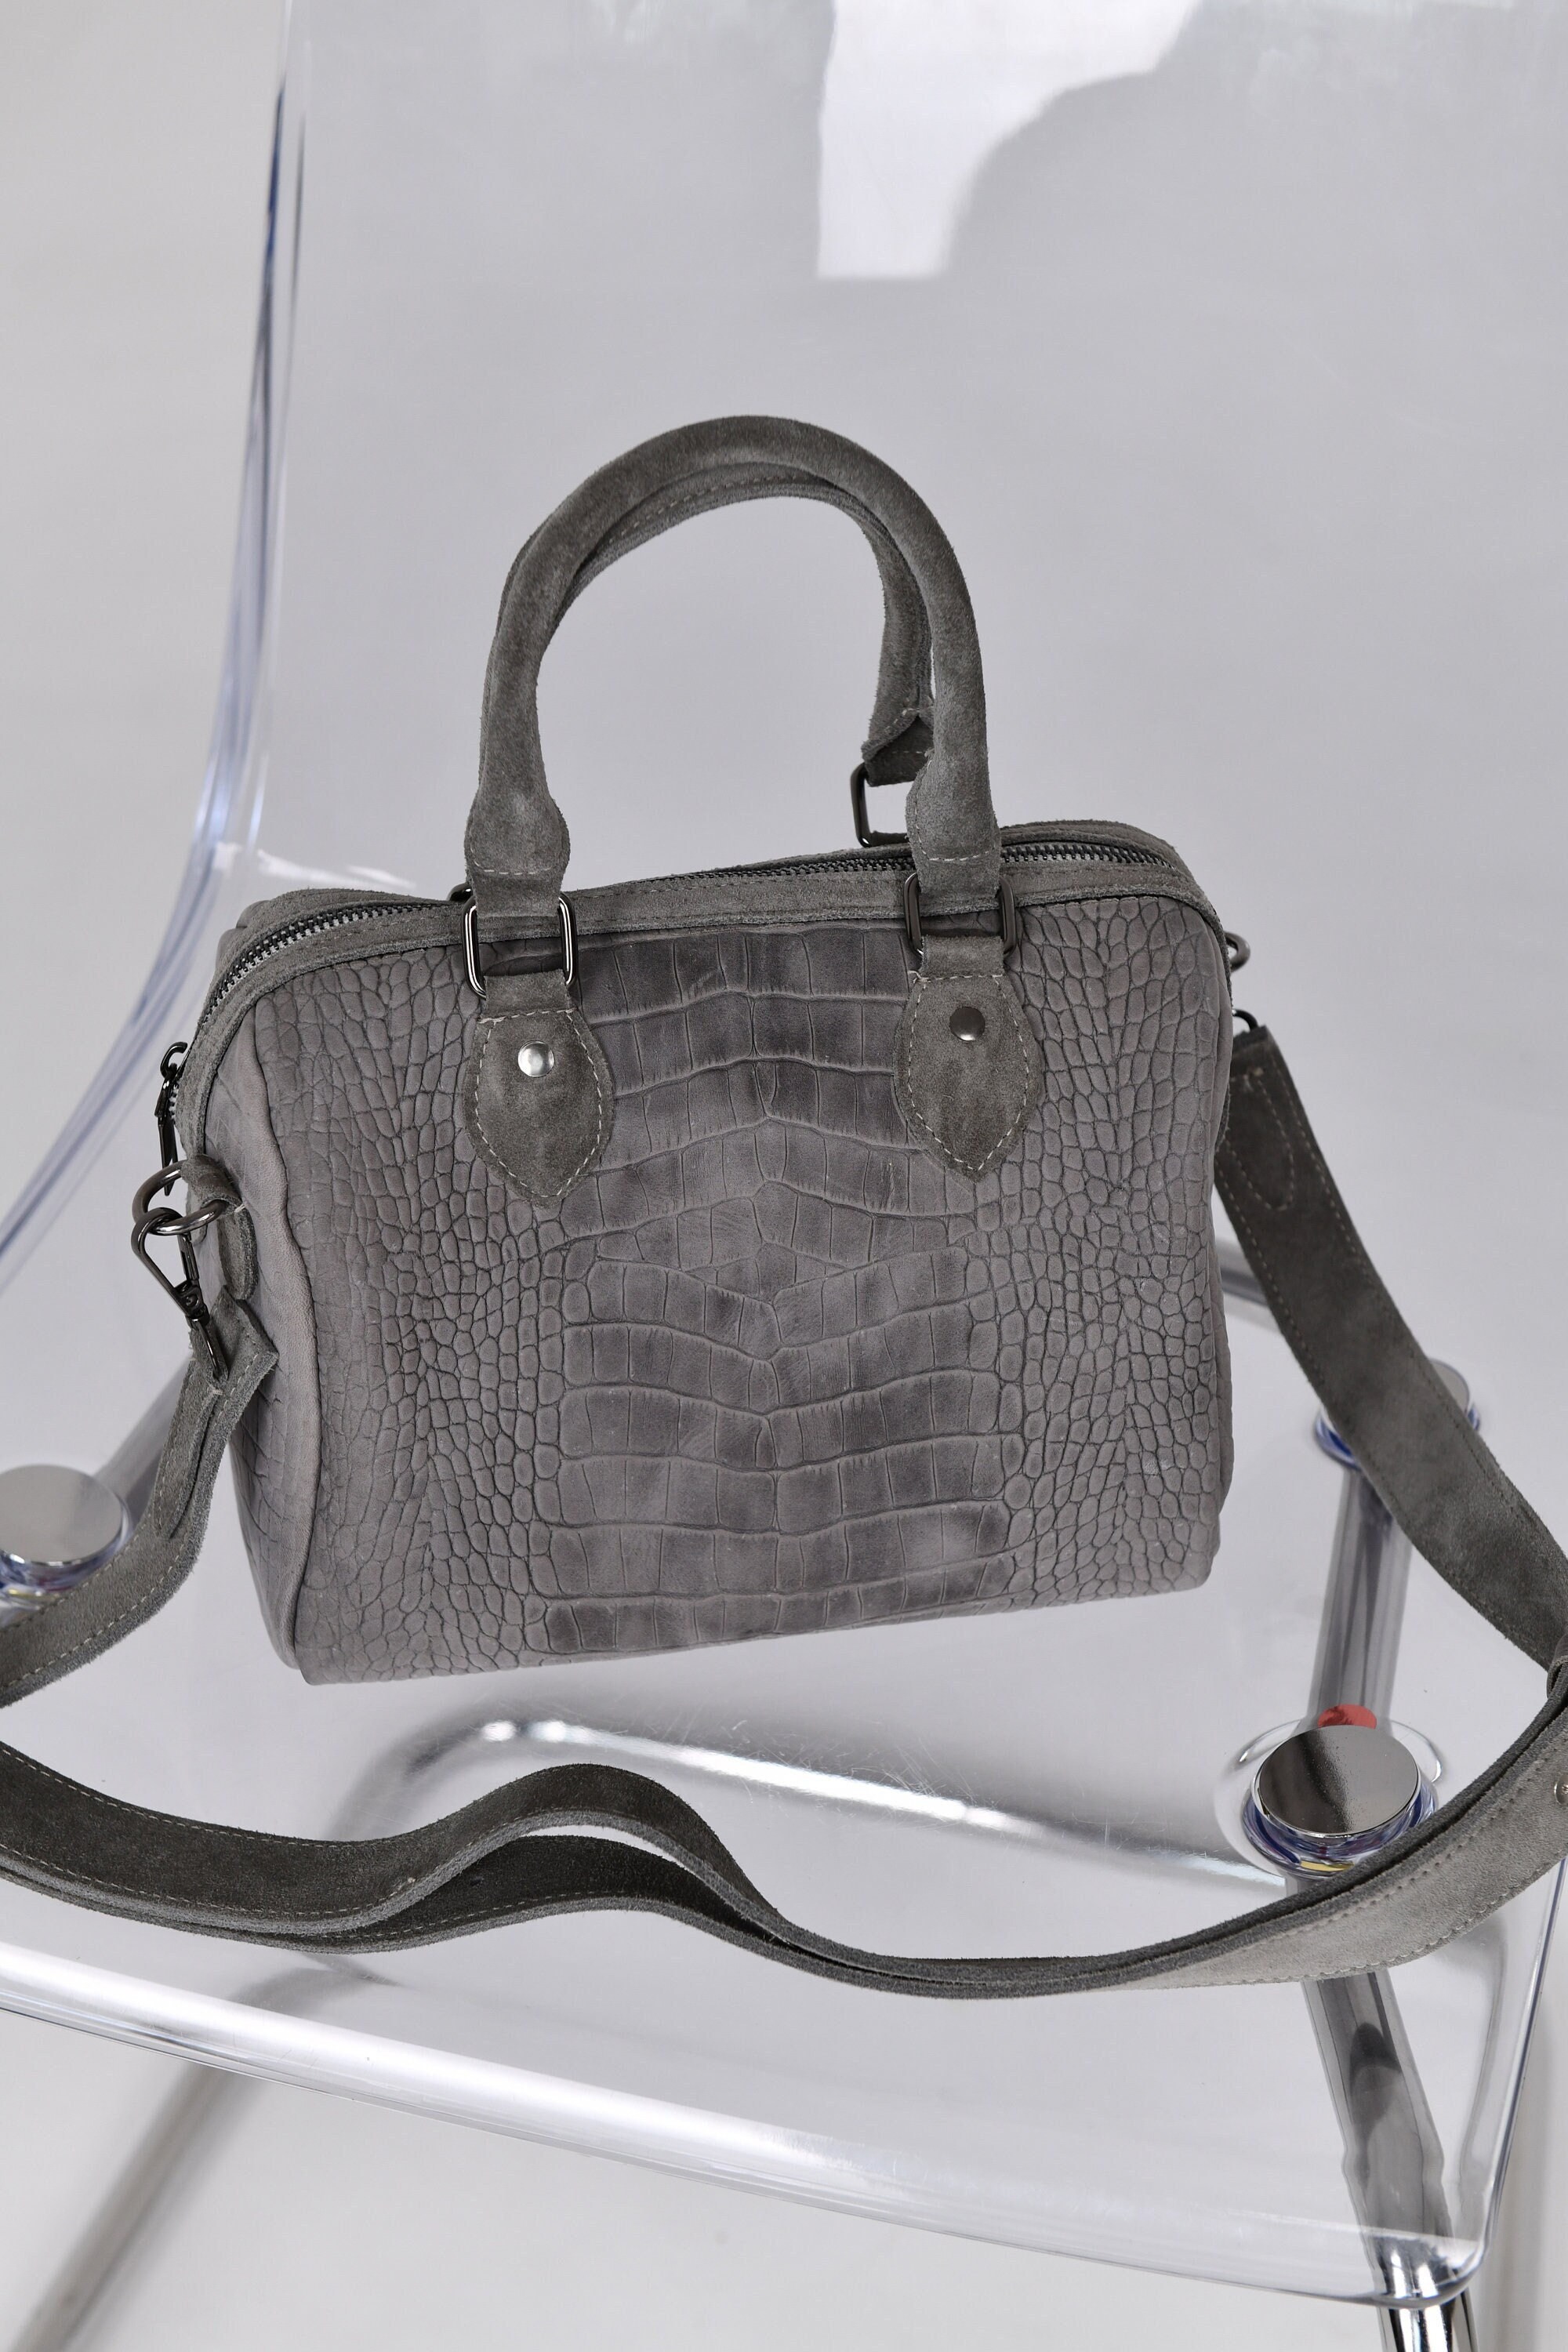 Genuine Leather Mustard Bag With Alligator Pattern Handbag 